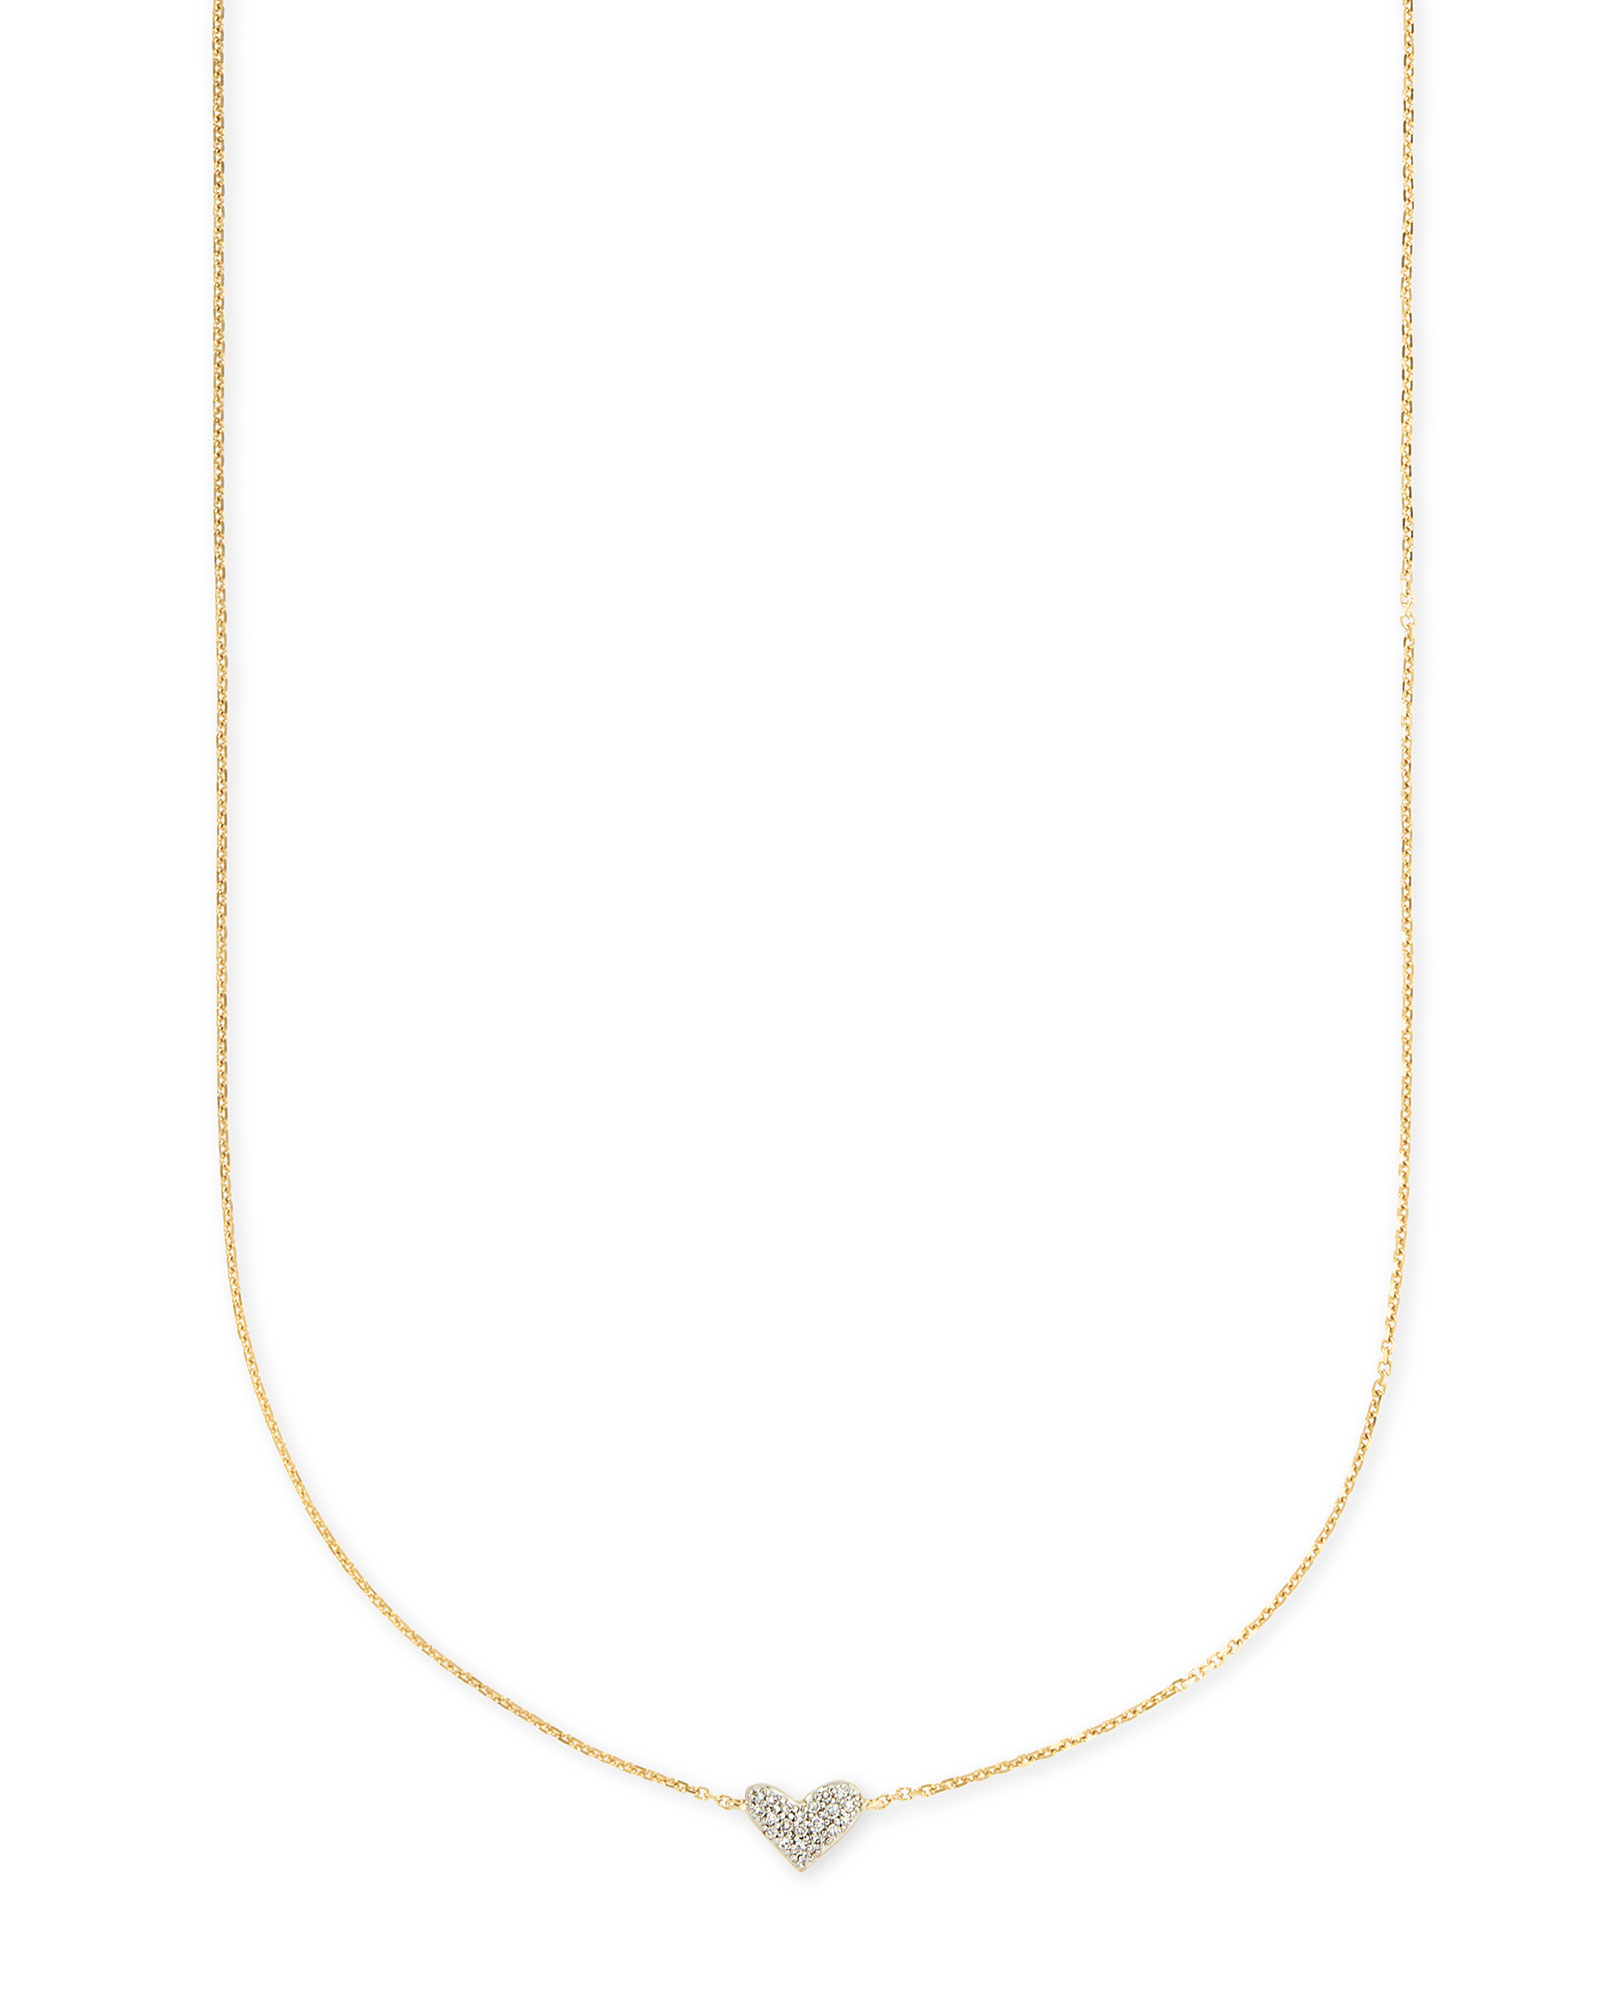 Ari Heart Silver Pendant Necklace in Amethyst | Kendra Scott